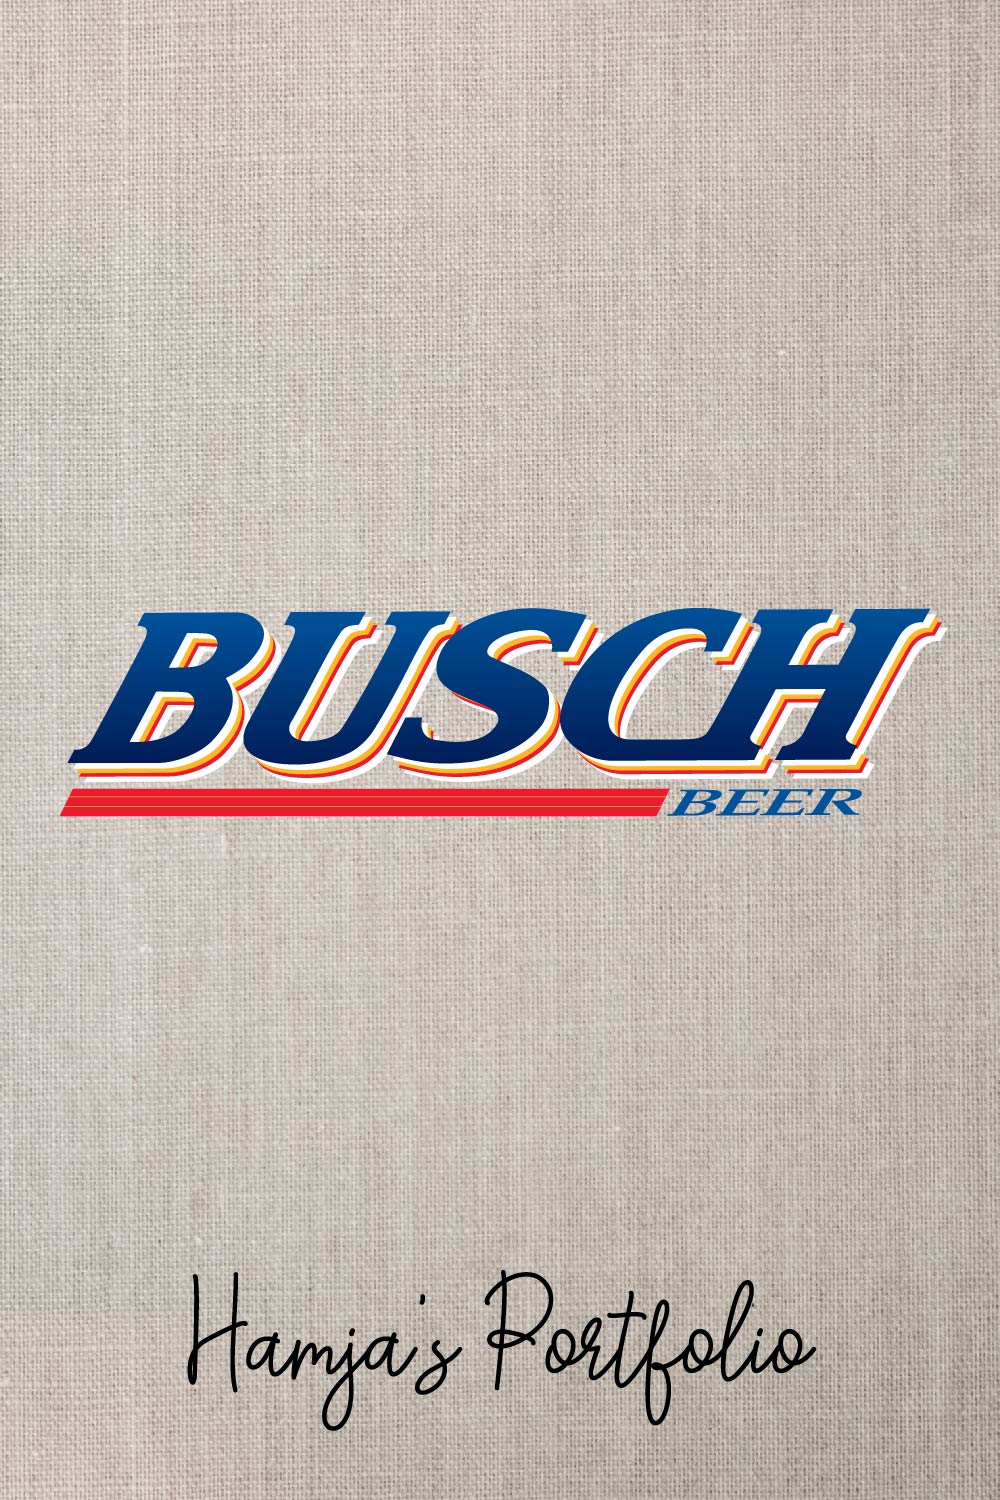 Busch Beer Vector Set pinterest preview image.